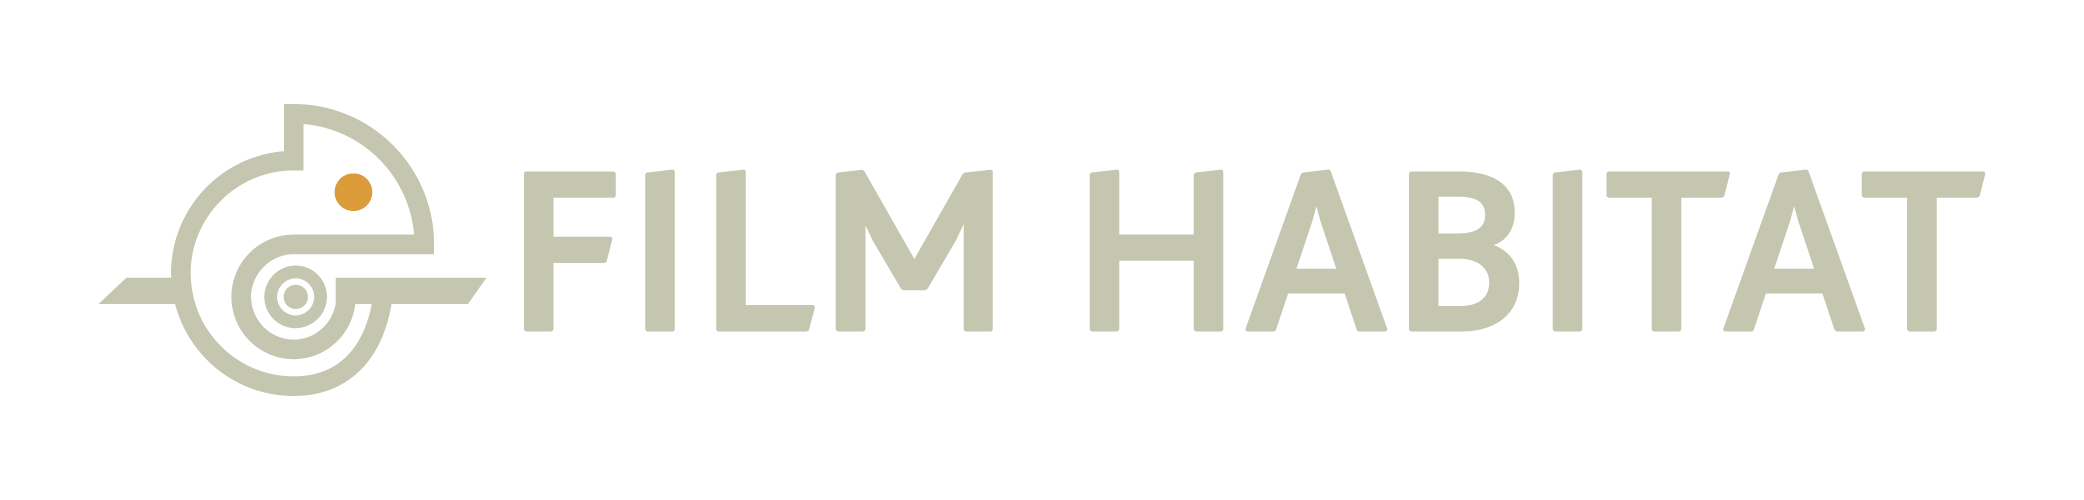 Video and Multimedia Production Company Sydney | Film Habitat